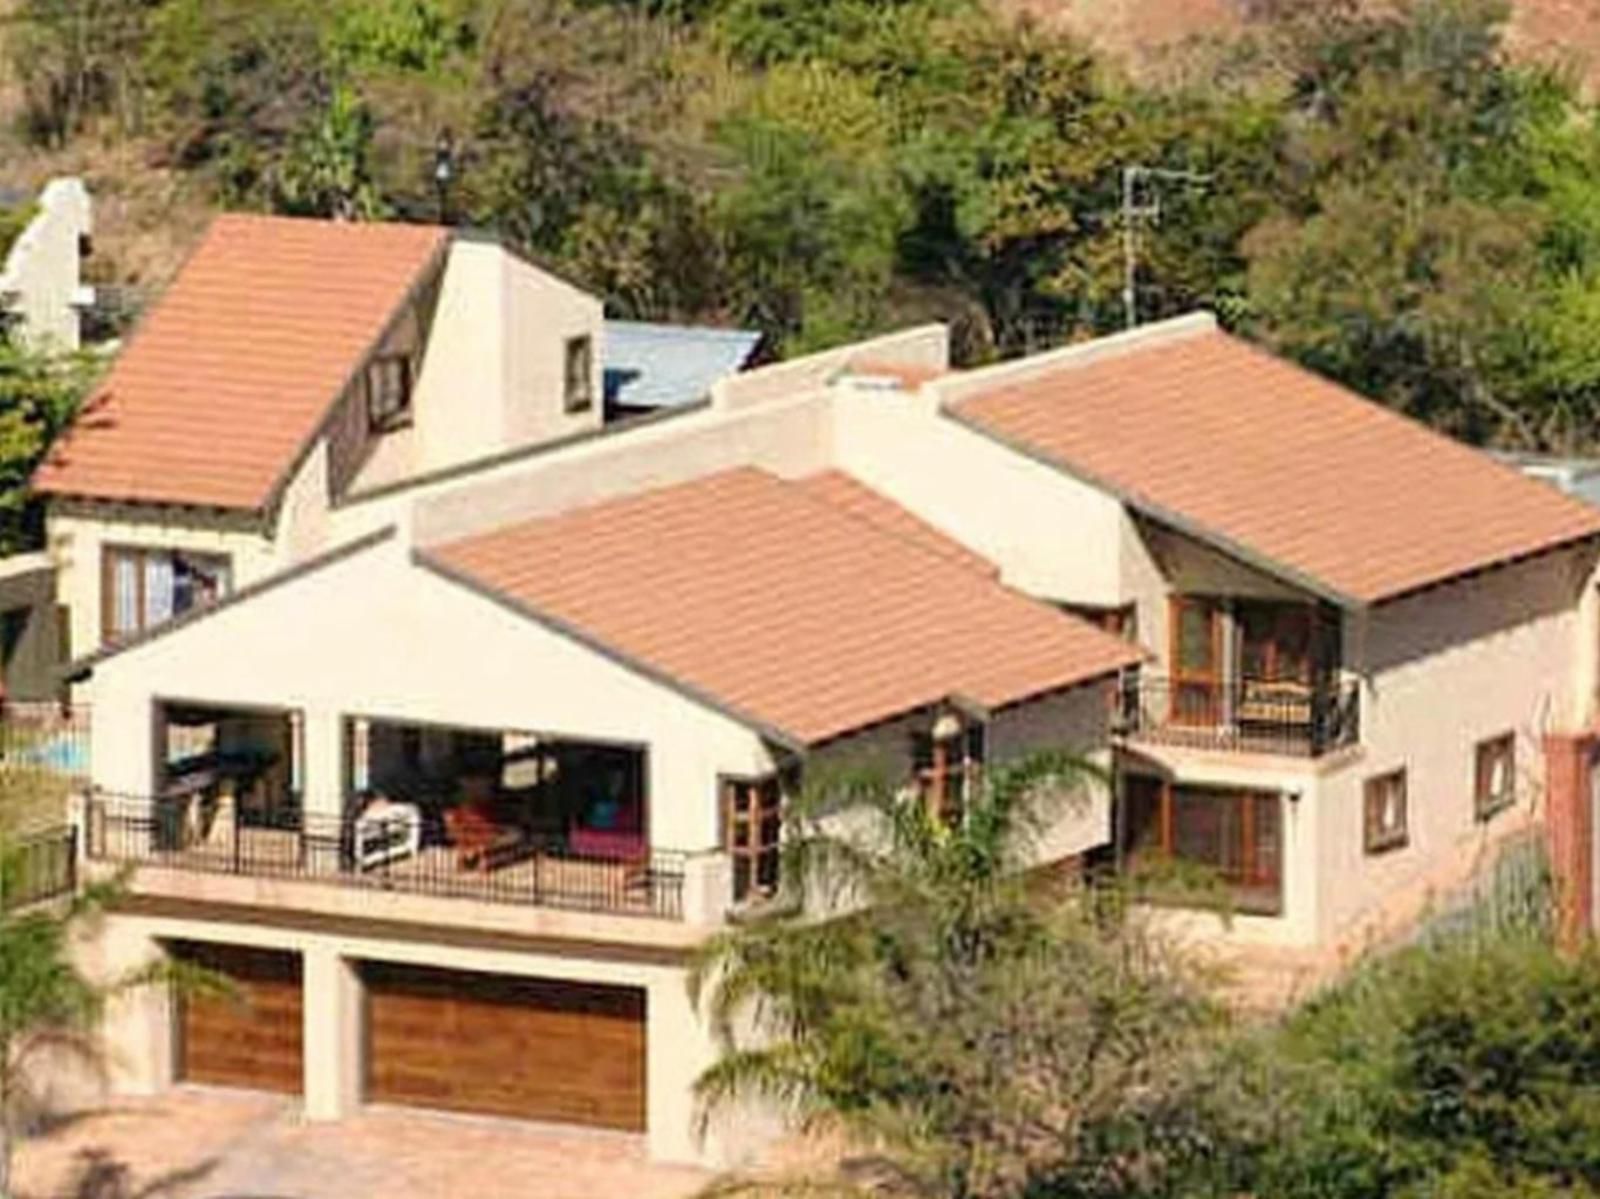 Threebees Guesthouse Montana Park Pretoria Tshwane Gauteng South Africa House, Building, Architecture